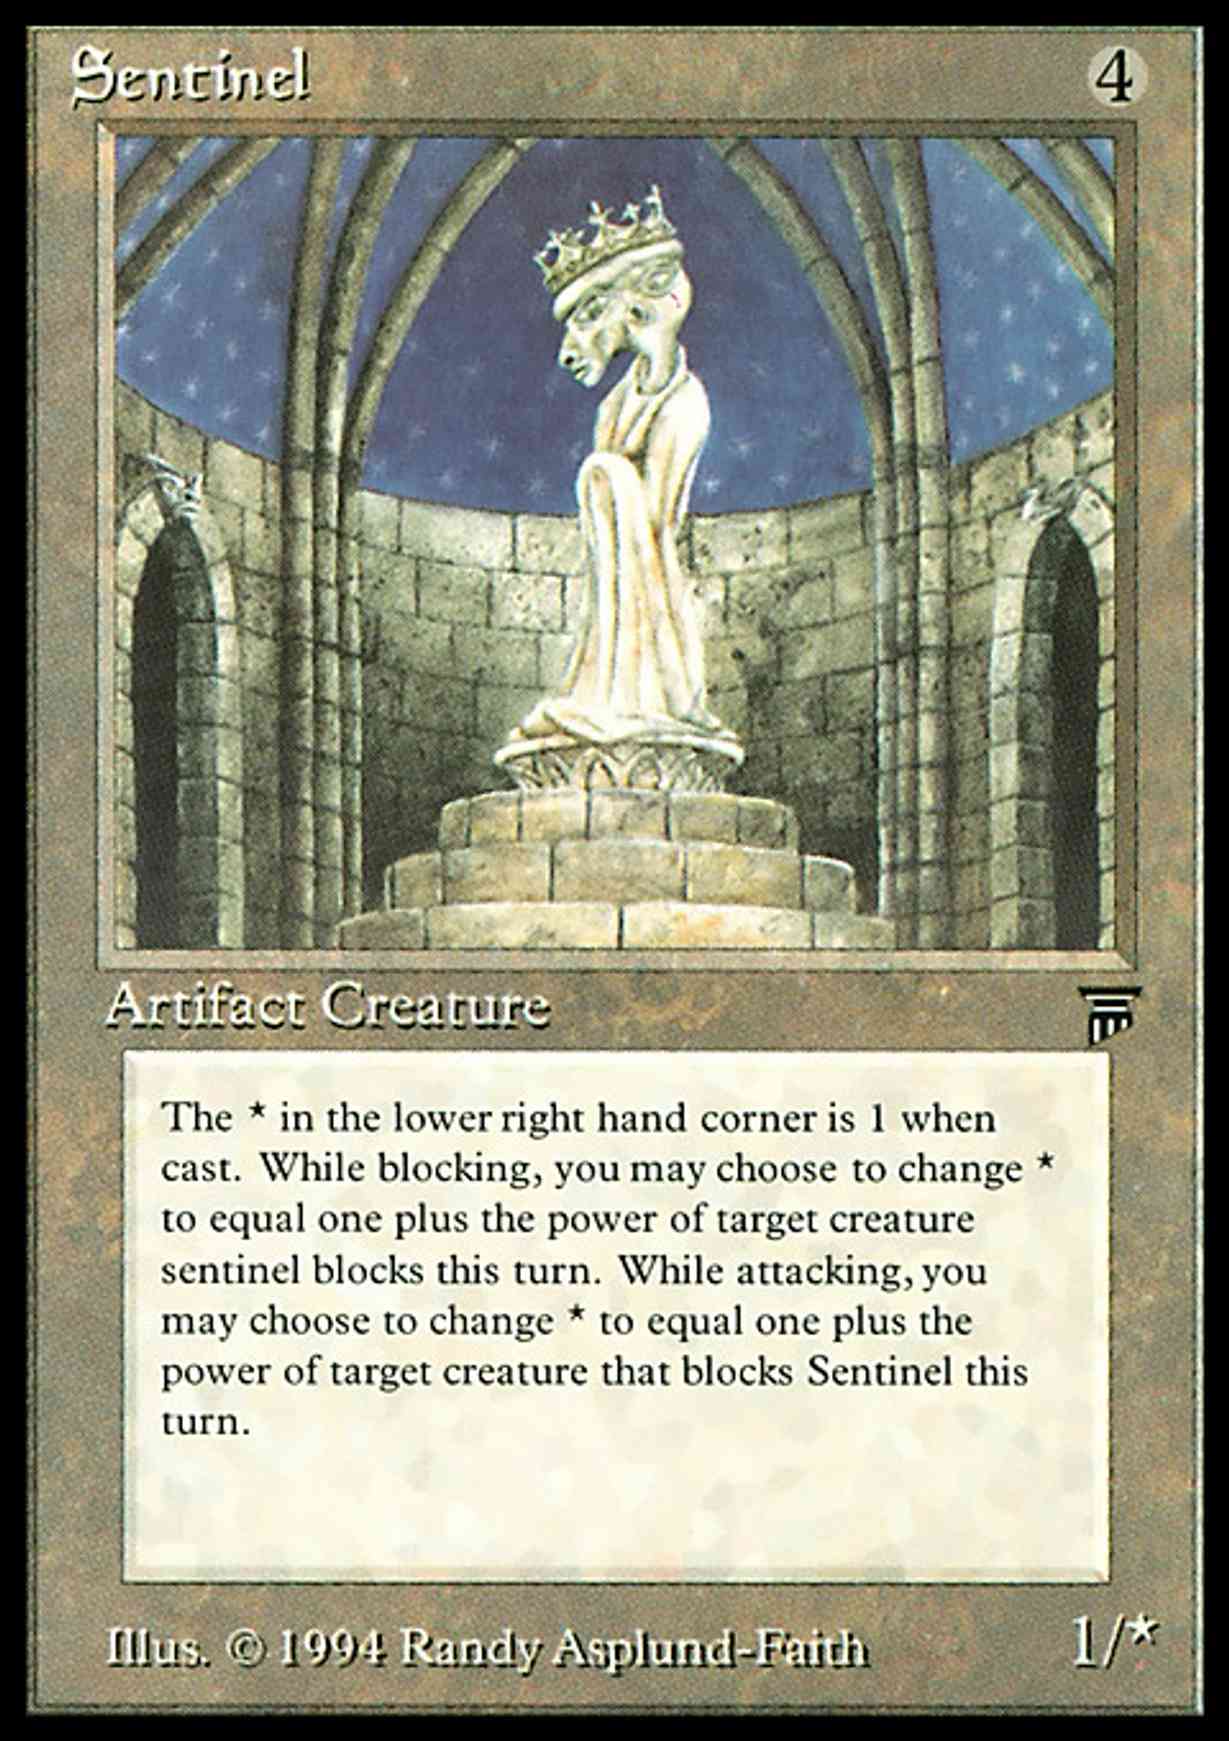 Sentinel magic card front